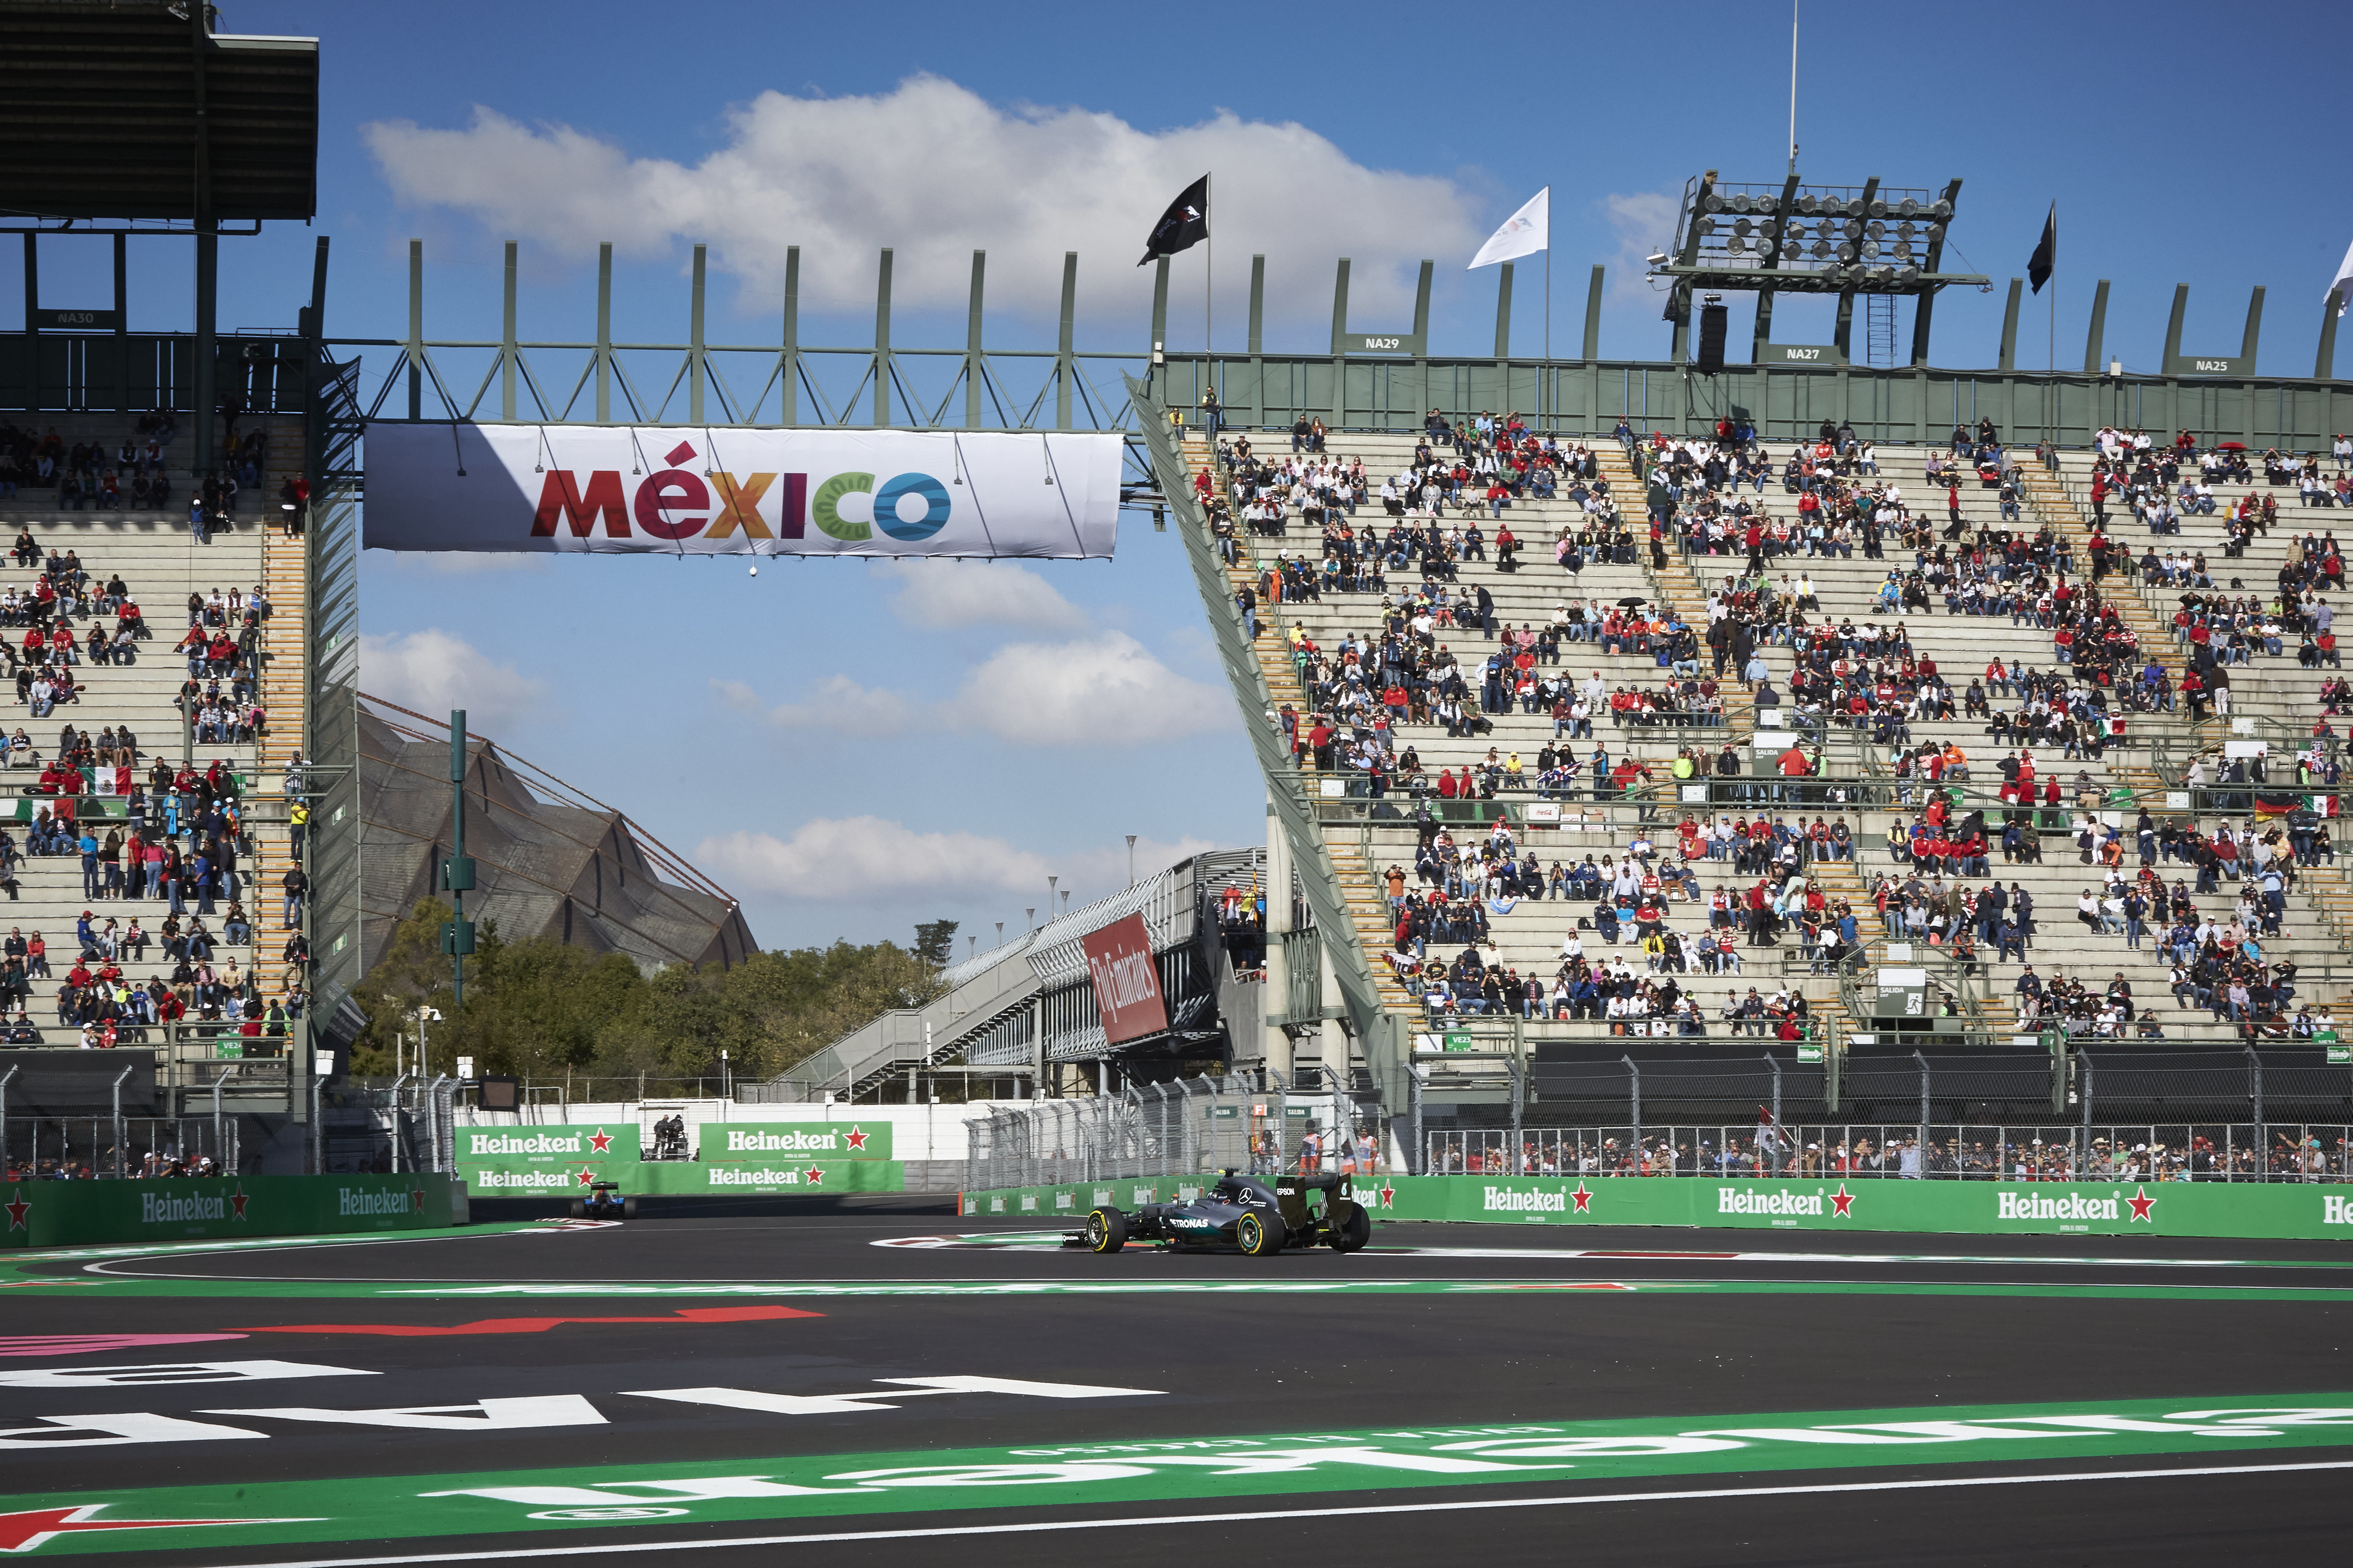 Formel 1 - MERCEDES AMG PETRONAS, Großer Preis von Mexiko 2016. Nico Rosberg 

Formula One - MERCEDES AMG PETRONAS, Mexican GP 2016. Nico Rosberg